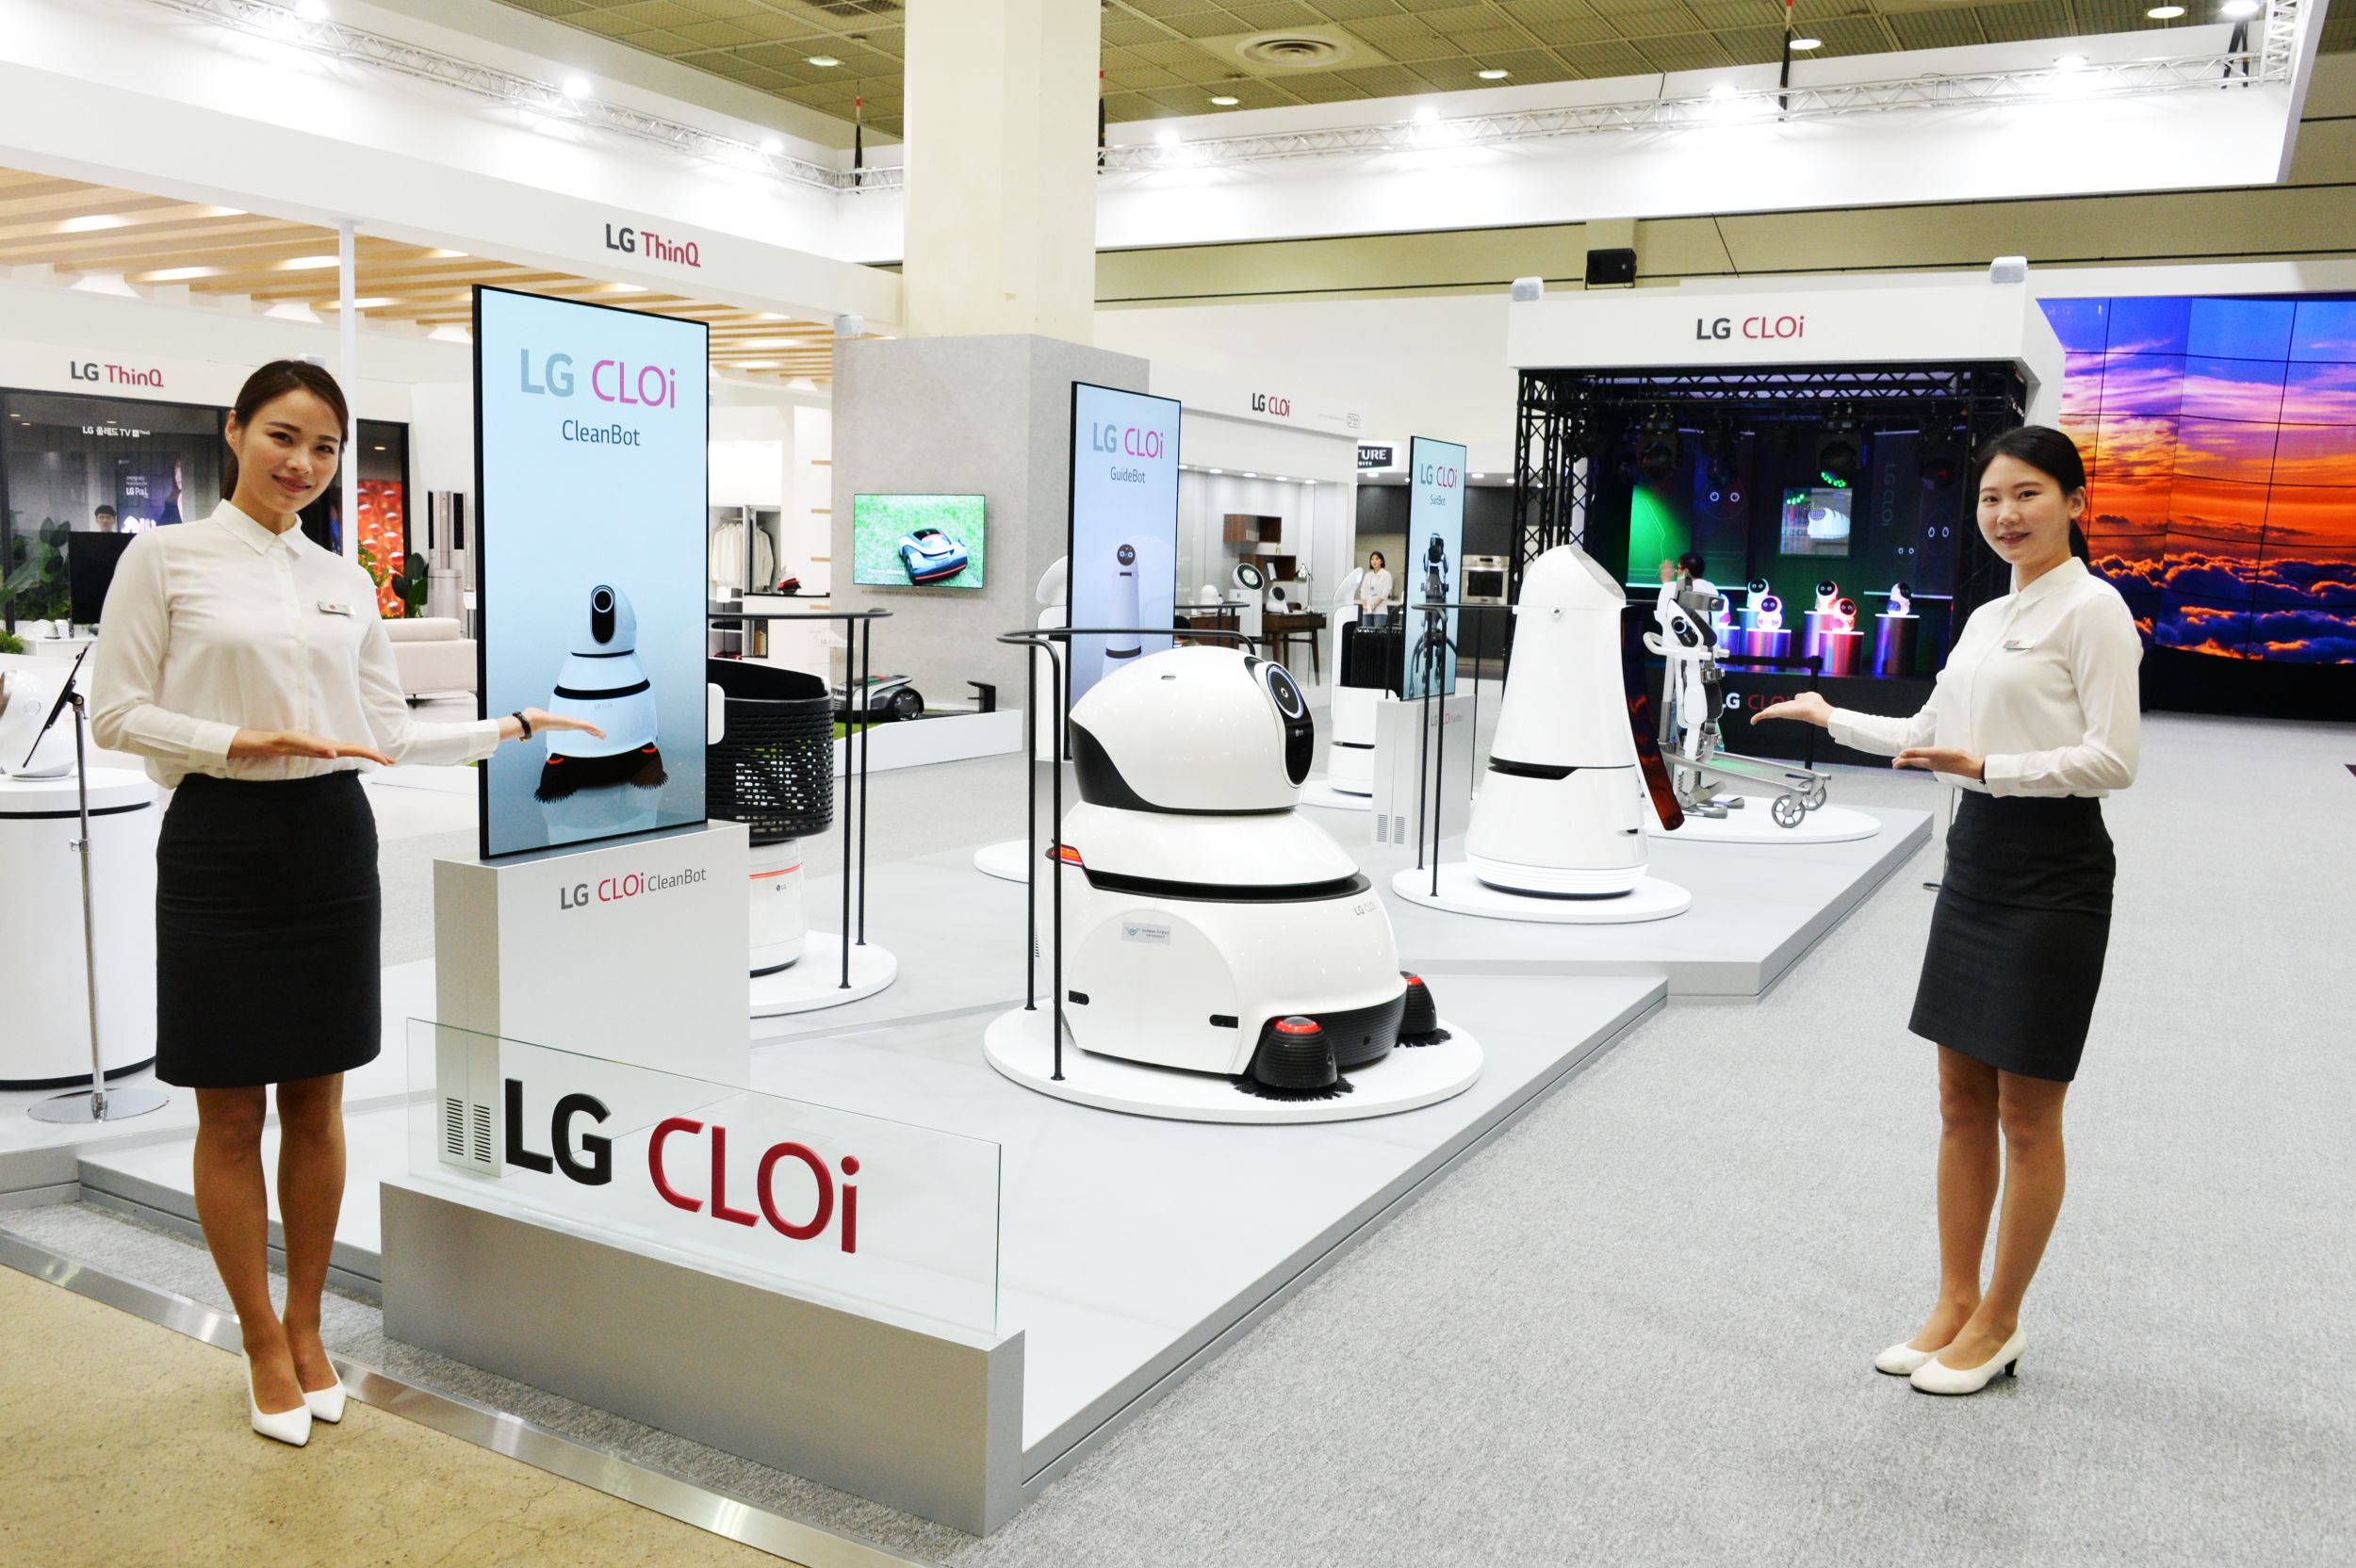 LG전자가 오늘부터 27일까지 서울 삼성동 코엑스에서 열리는 'KES 2018' 전시에 참가해 인공지능 'LG 씽큐' 가전을 대거 소개하며 인공지능 선도 기업 이미지를 부각한다. LG전자 모델들이 LG 클로이 로봇을 소개하고 있다.